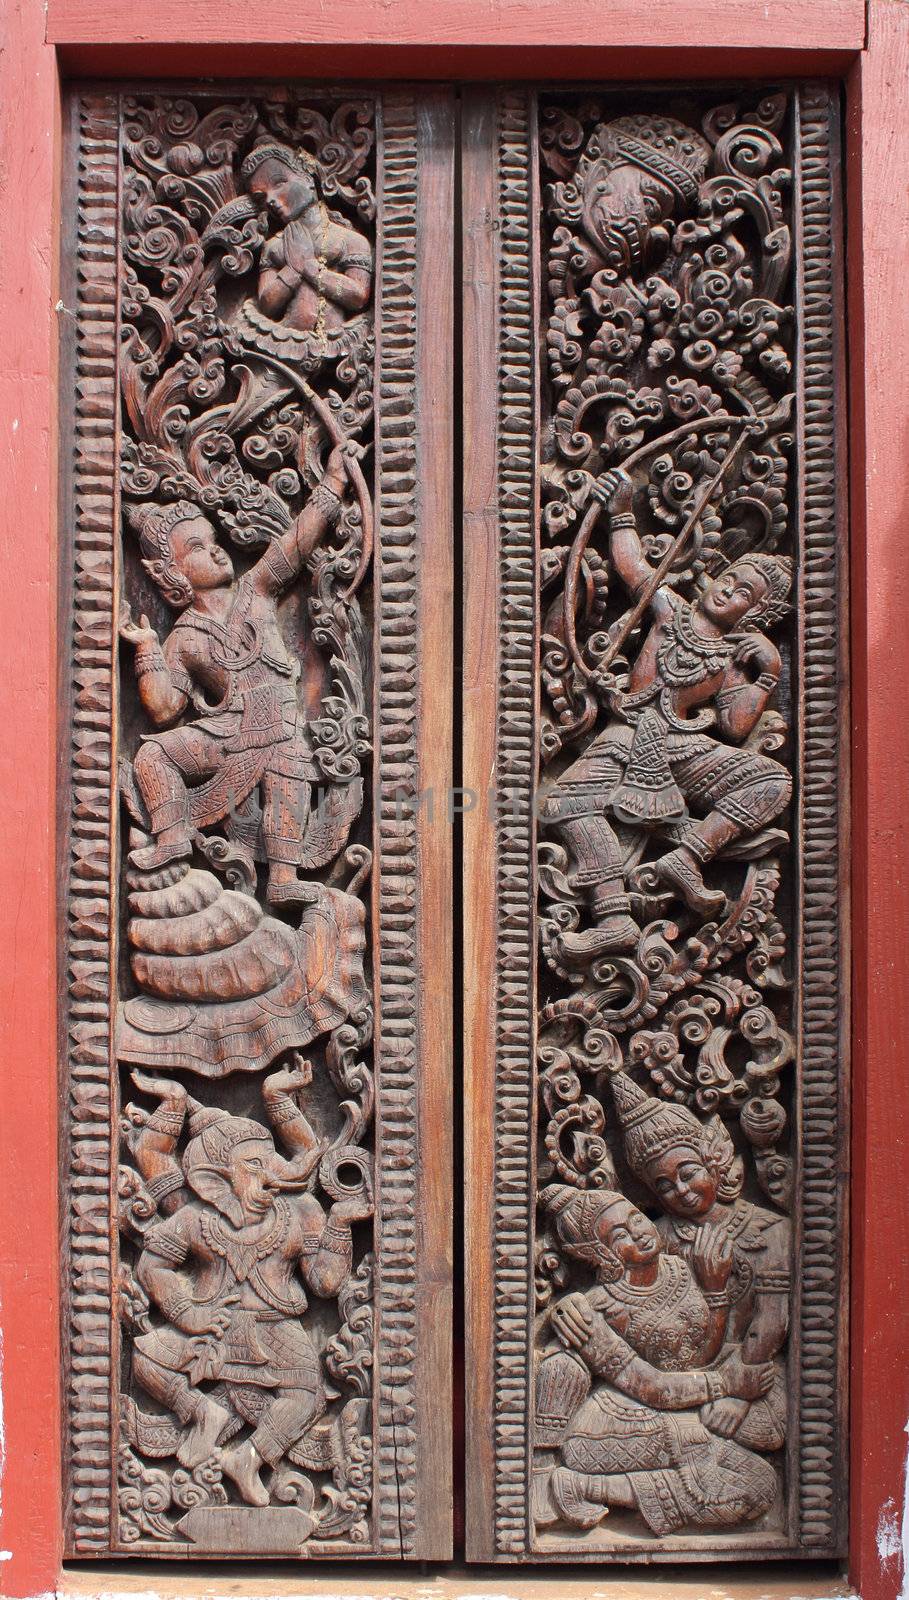 Decorated wooden door in Buddhist temple, Laos